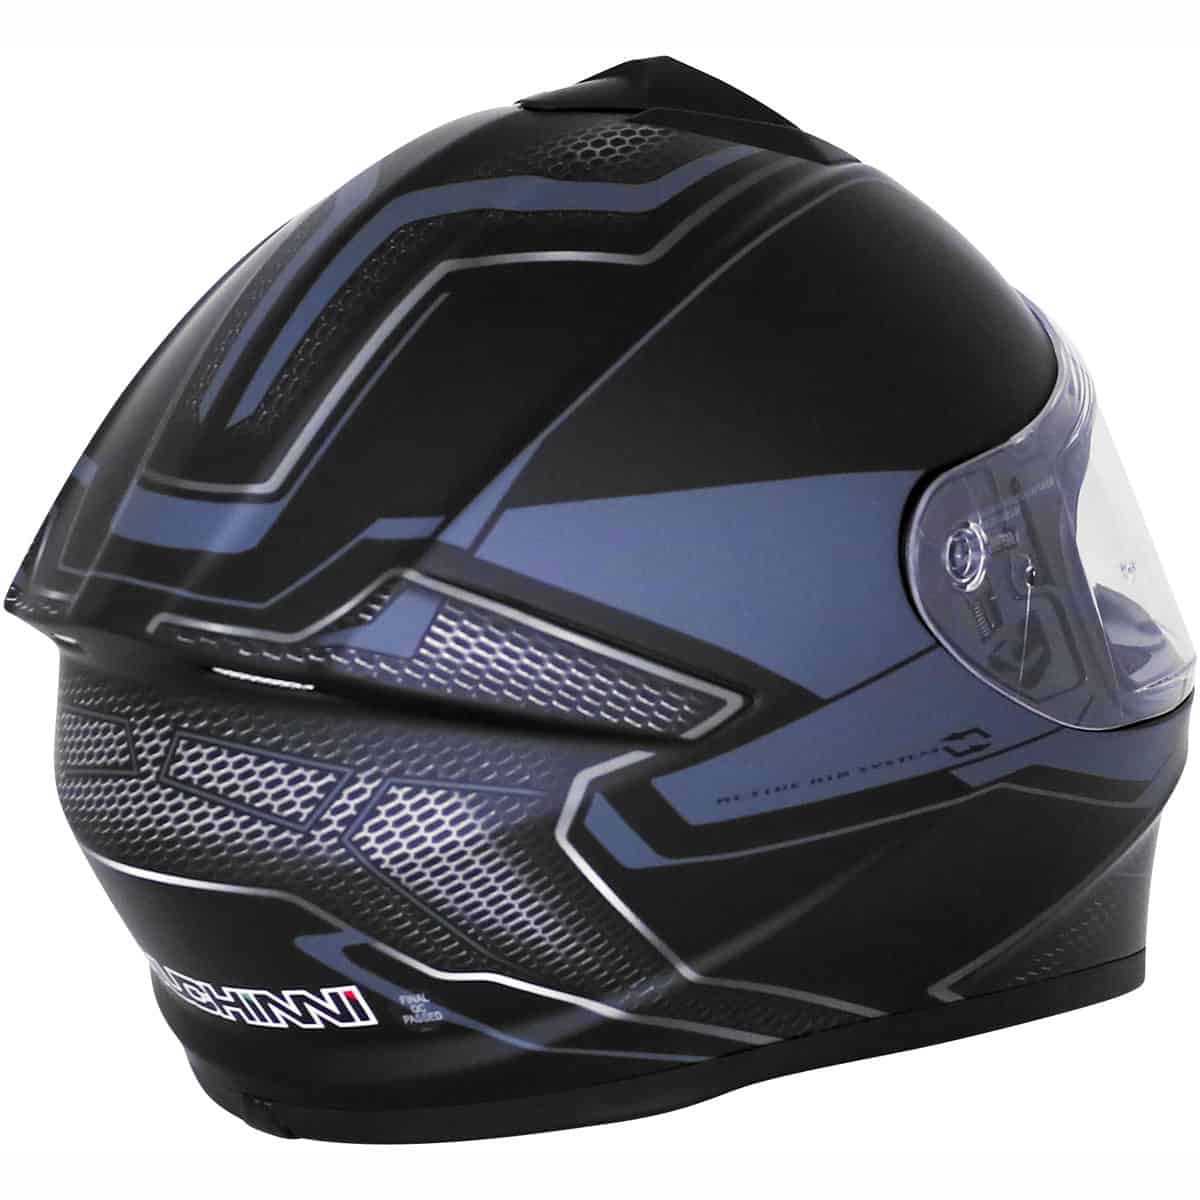 Duchinni D977 Full Face Motorcycle Helmet - Black Gun 3